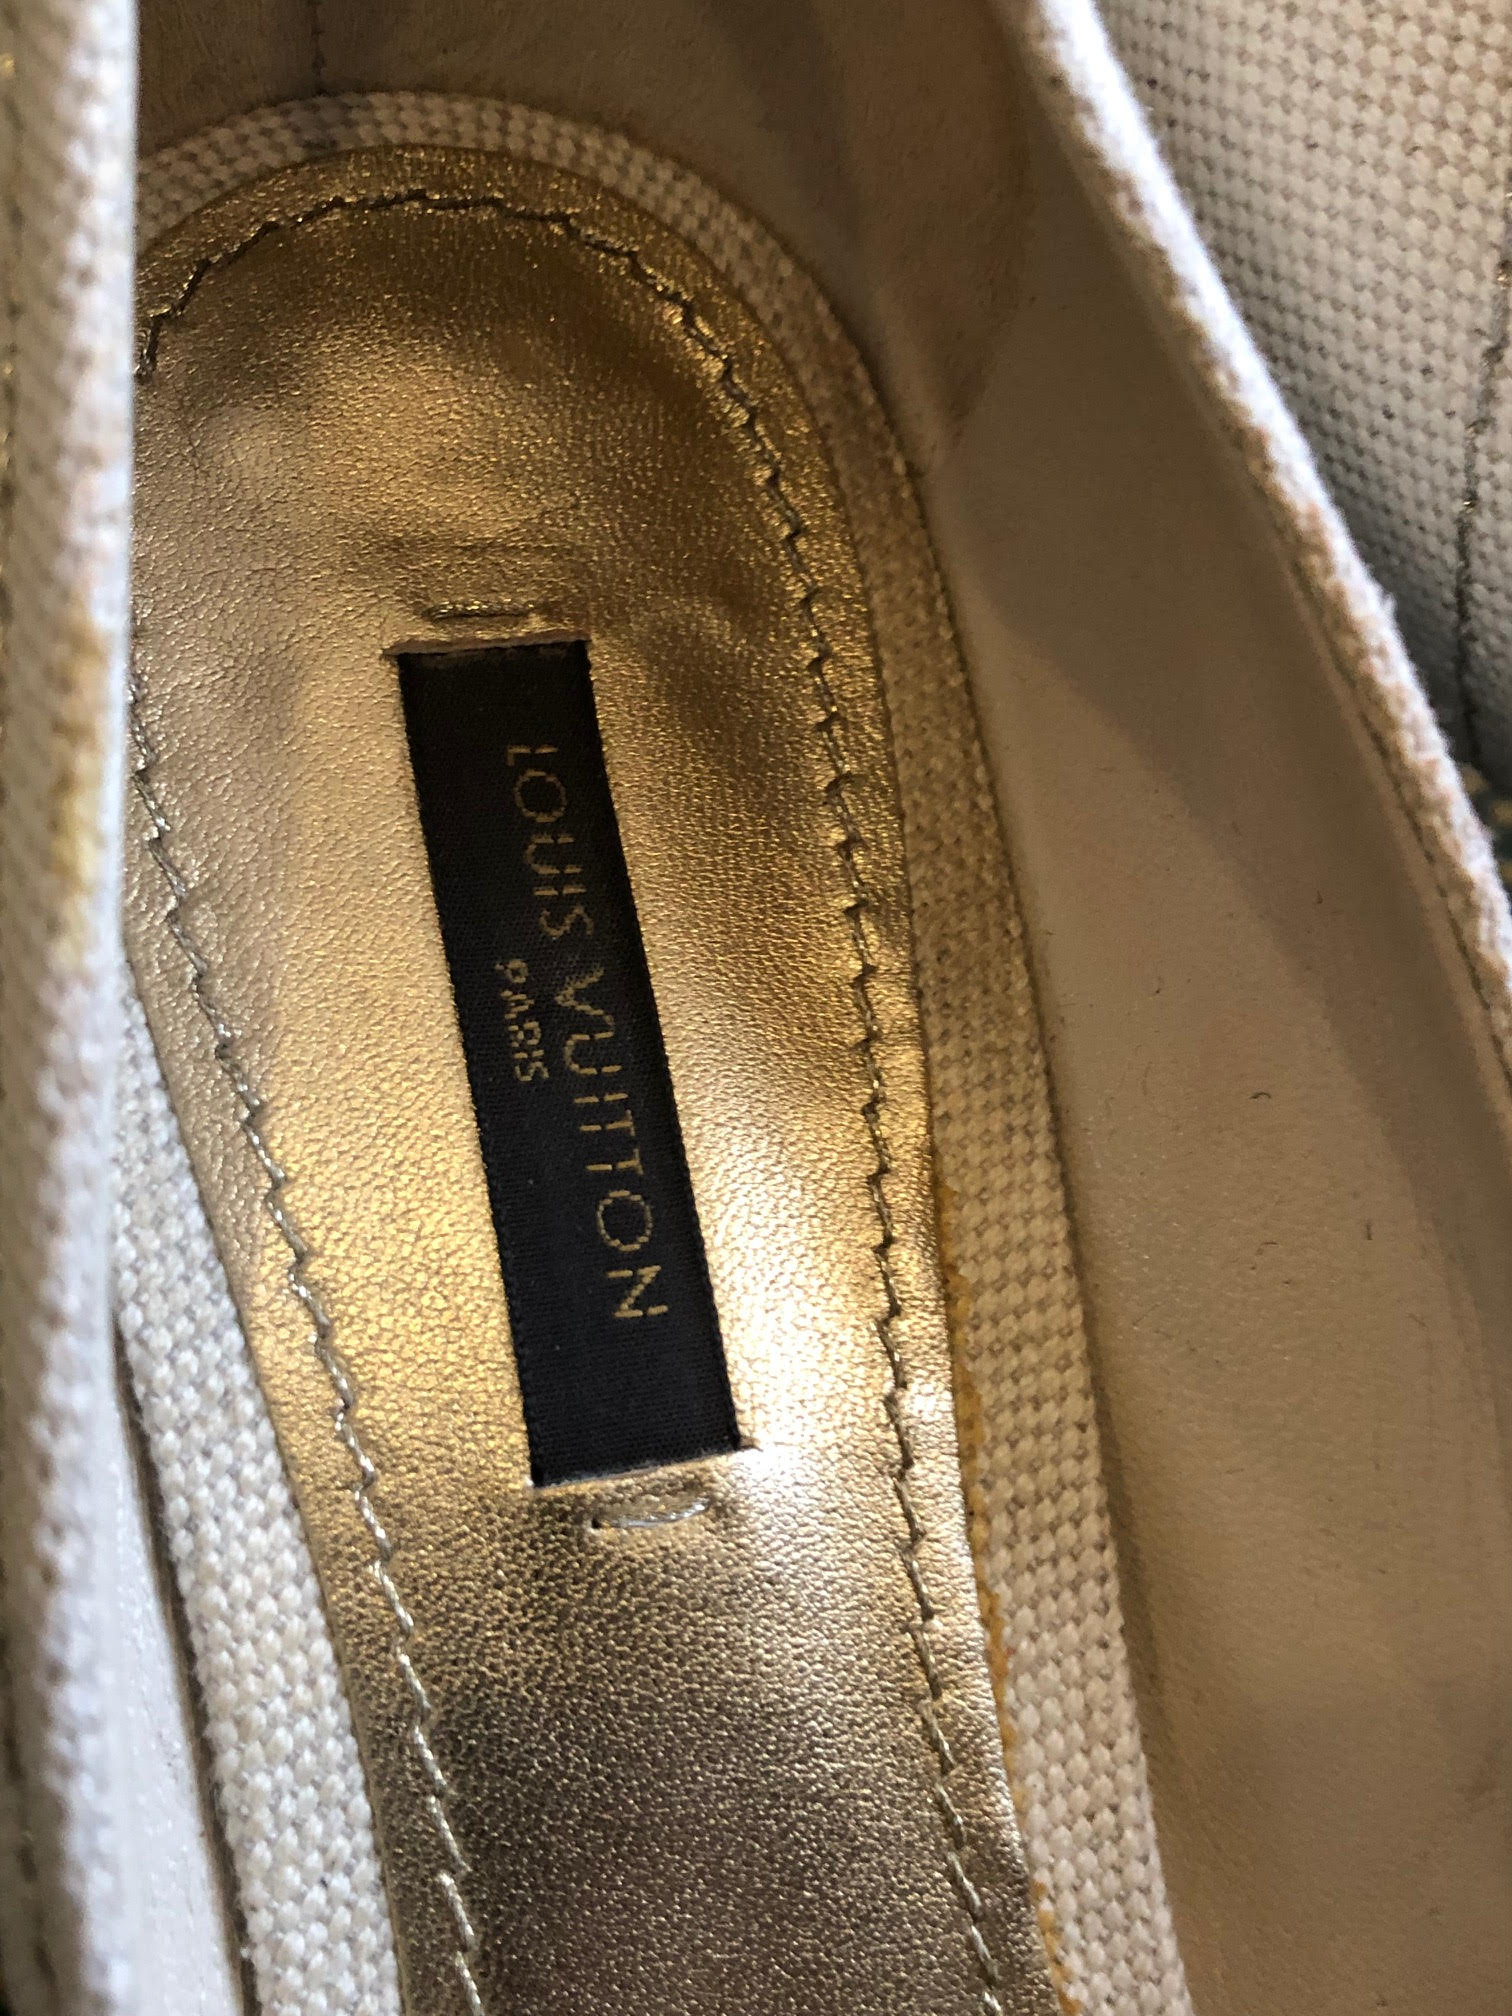 Louis Vuitton Teal/Turquoise High Heels Shoes Leopard Tassel Open